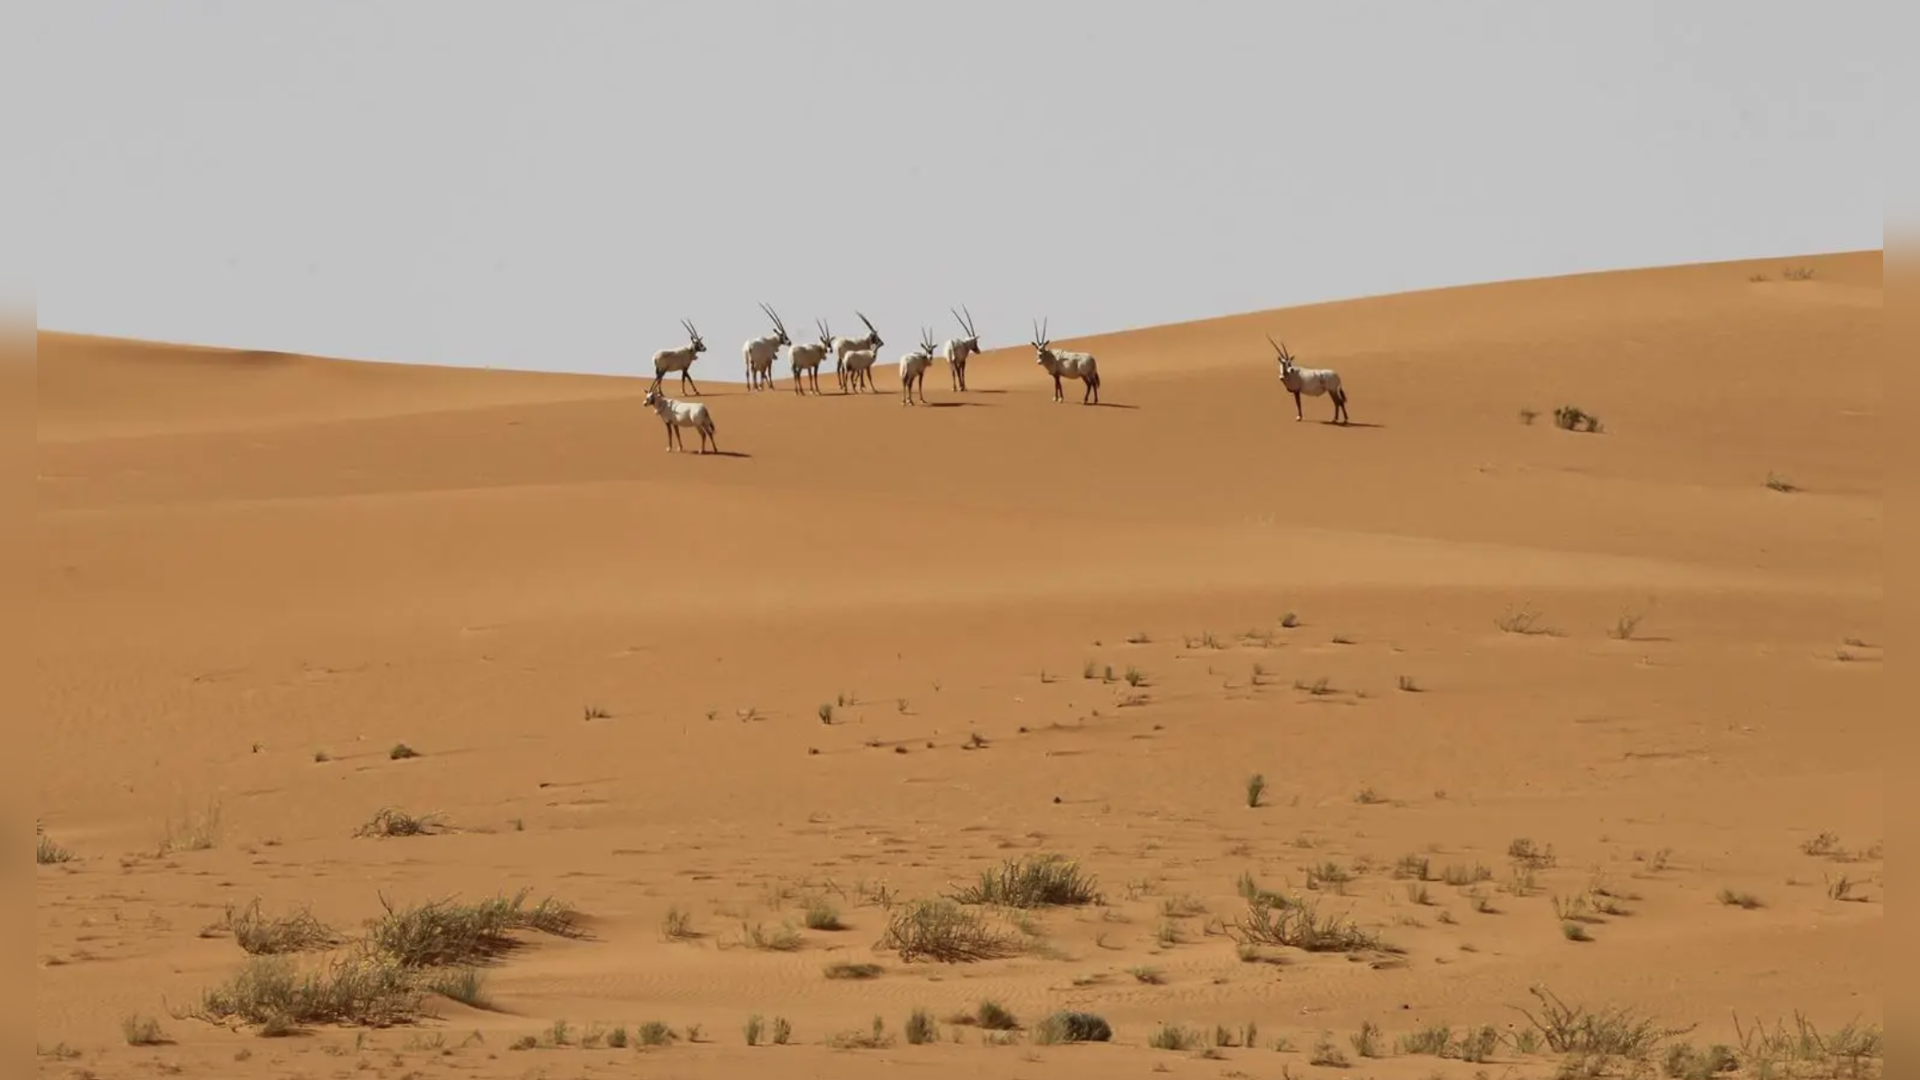 Uruq Bani Ma'arid Reserve Joins UNESCO's World Heritage List as Saudi Arabia's First Natural Heritage Site